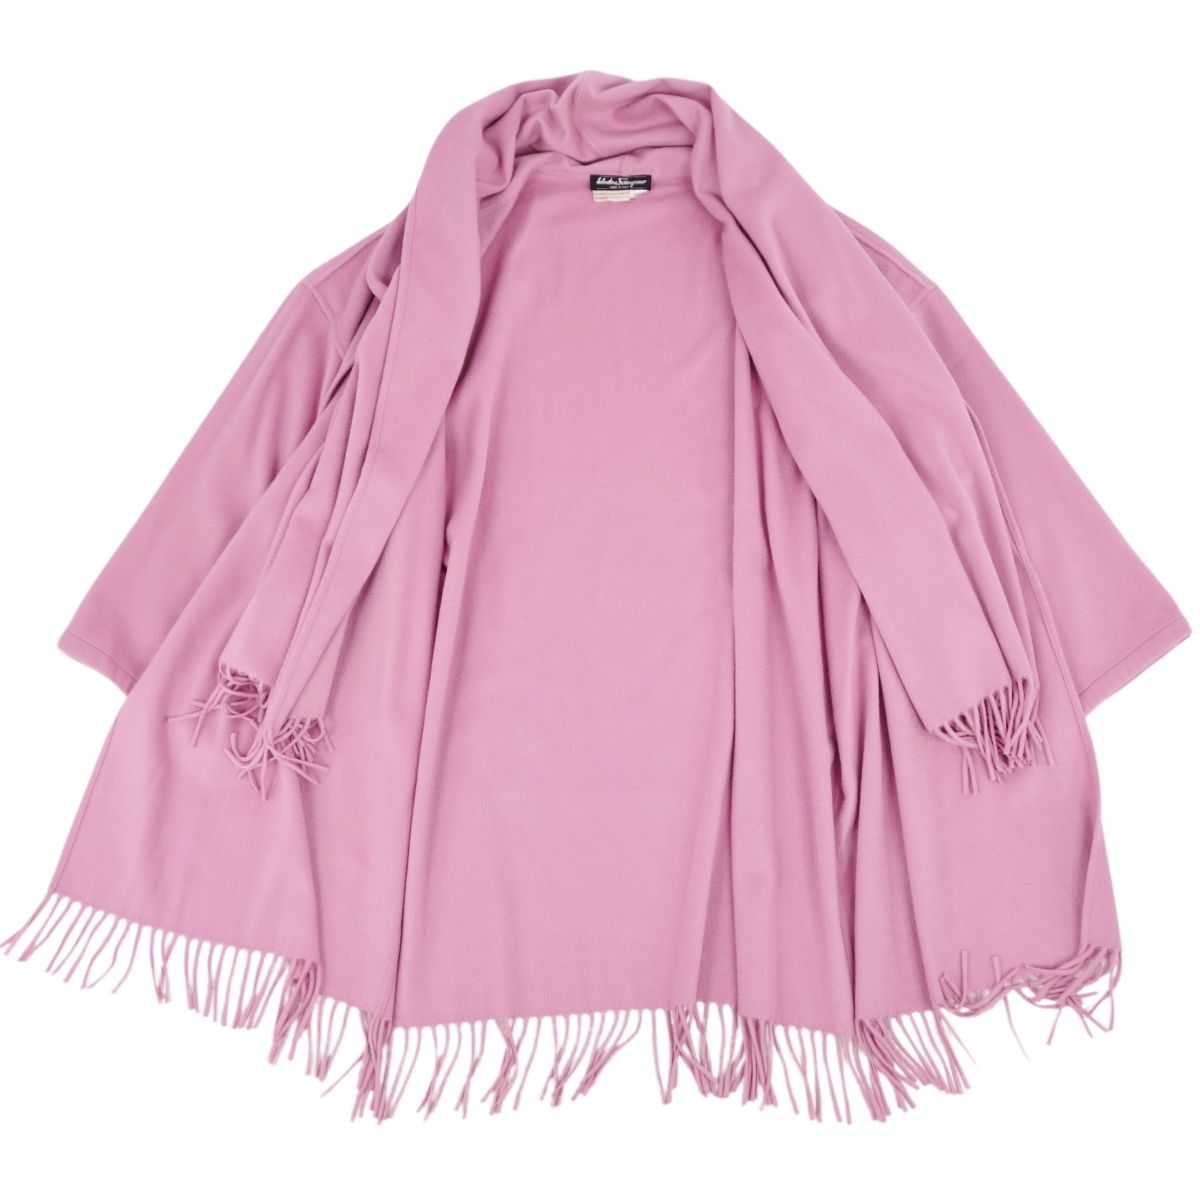 Salvatore Ferragamo Coat Buttonless Cashmereia 100%   Free Pink